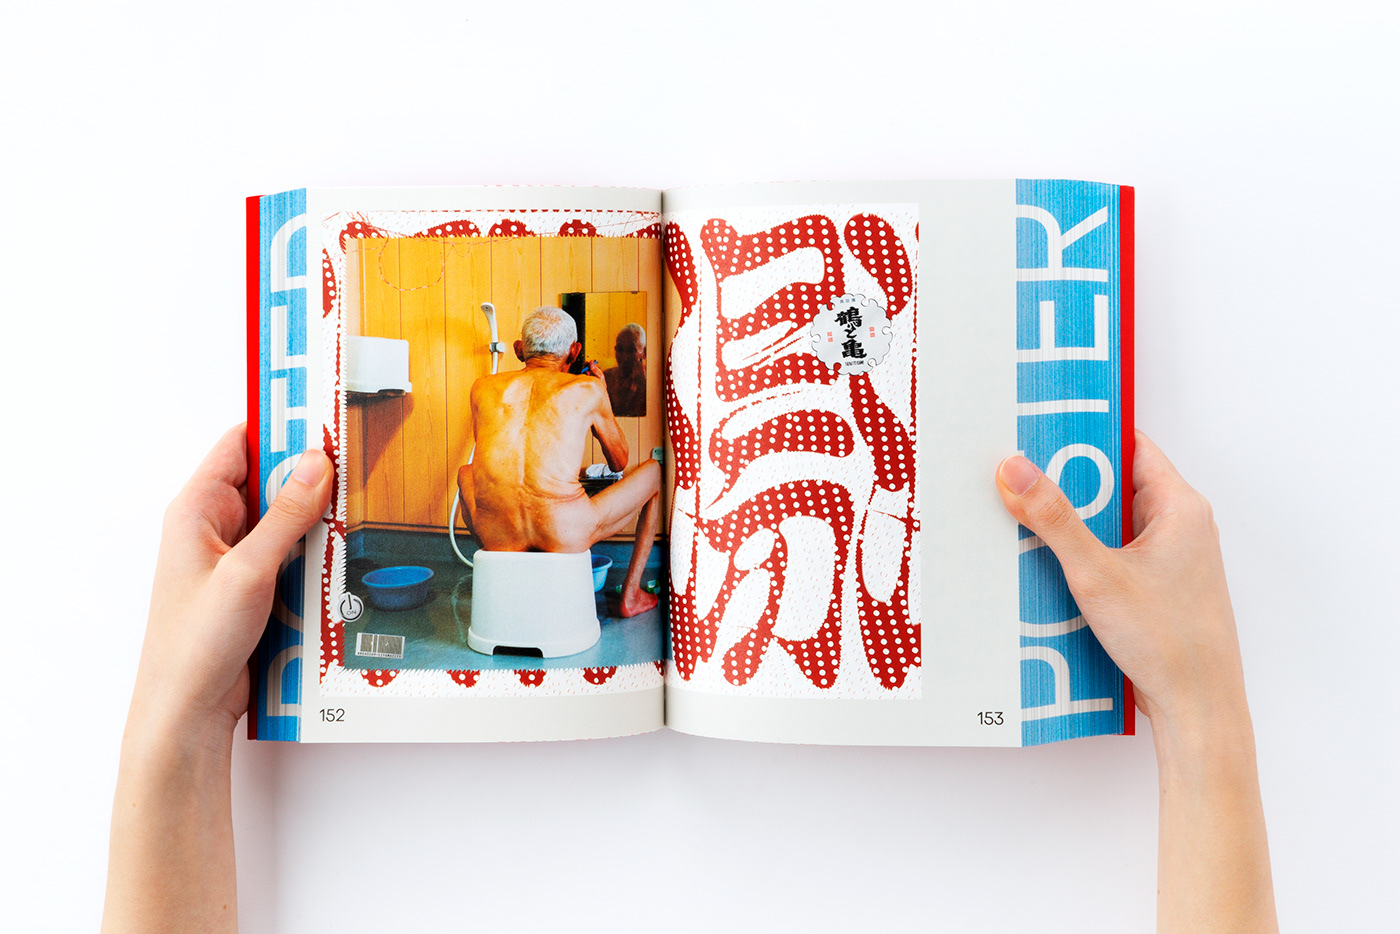 poster japan japanese graphic design  book design editorial InDesign editorial design  typography  